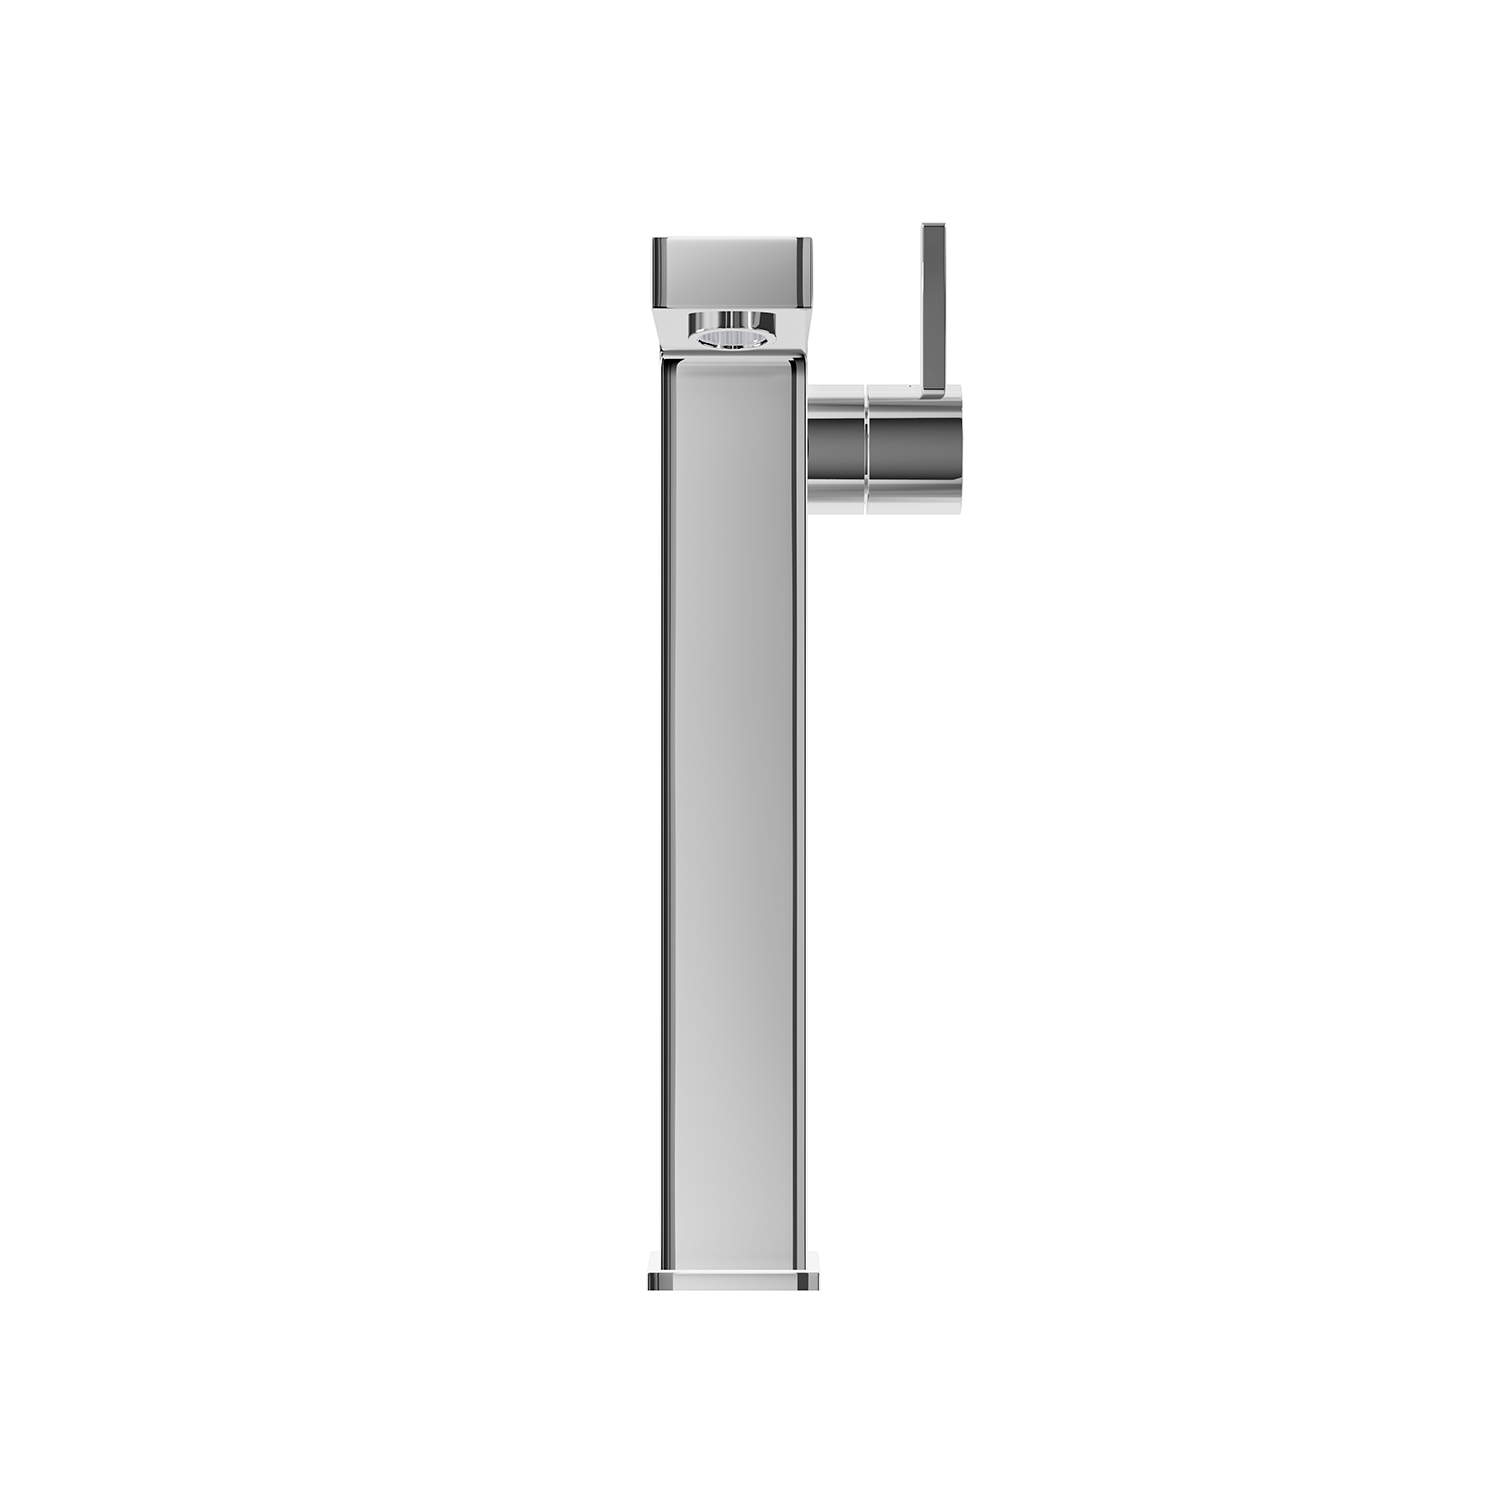 DAX Single Handle Vessel Sink Bathroom Faucet, Brass Body, Chrome Finish, 4-3/4 x 10-1/16 Inches (DAX-8227B)